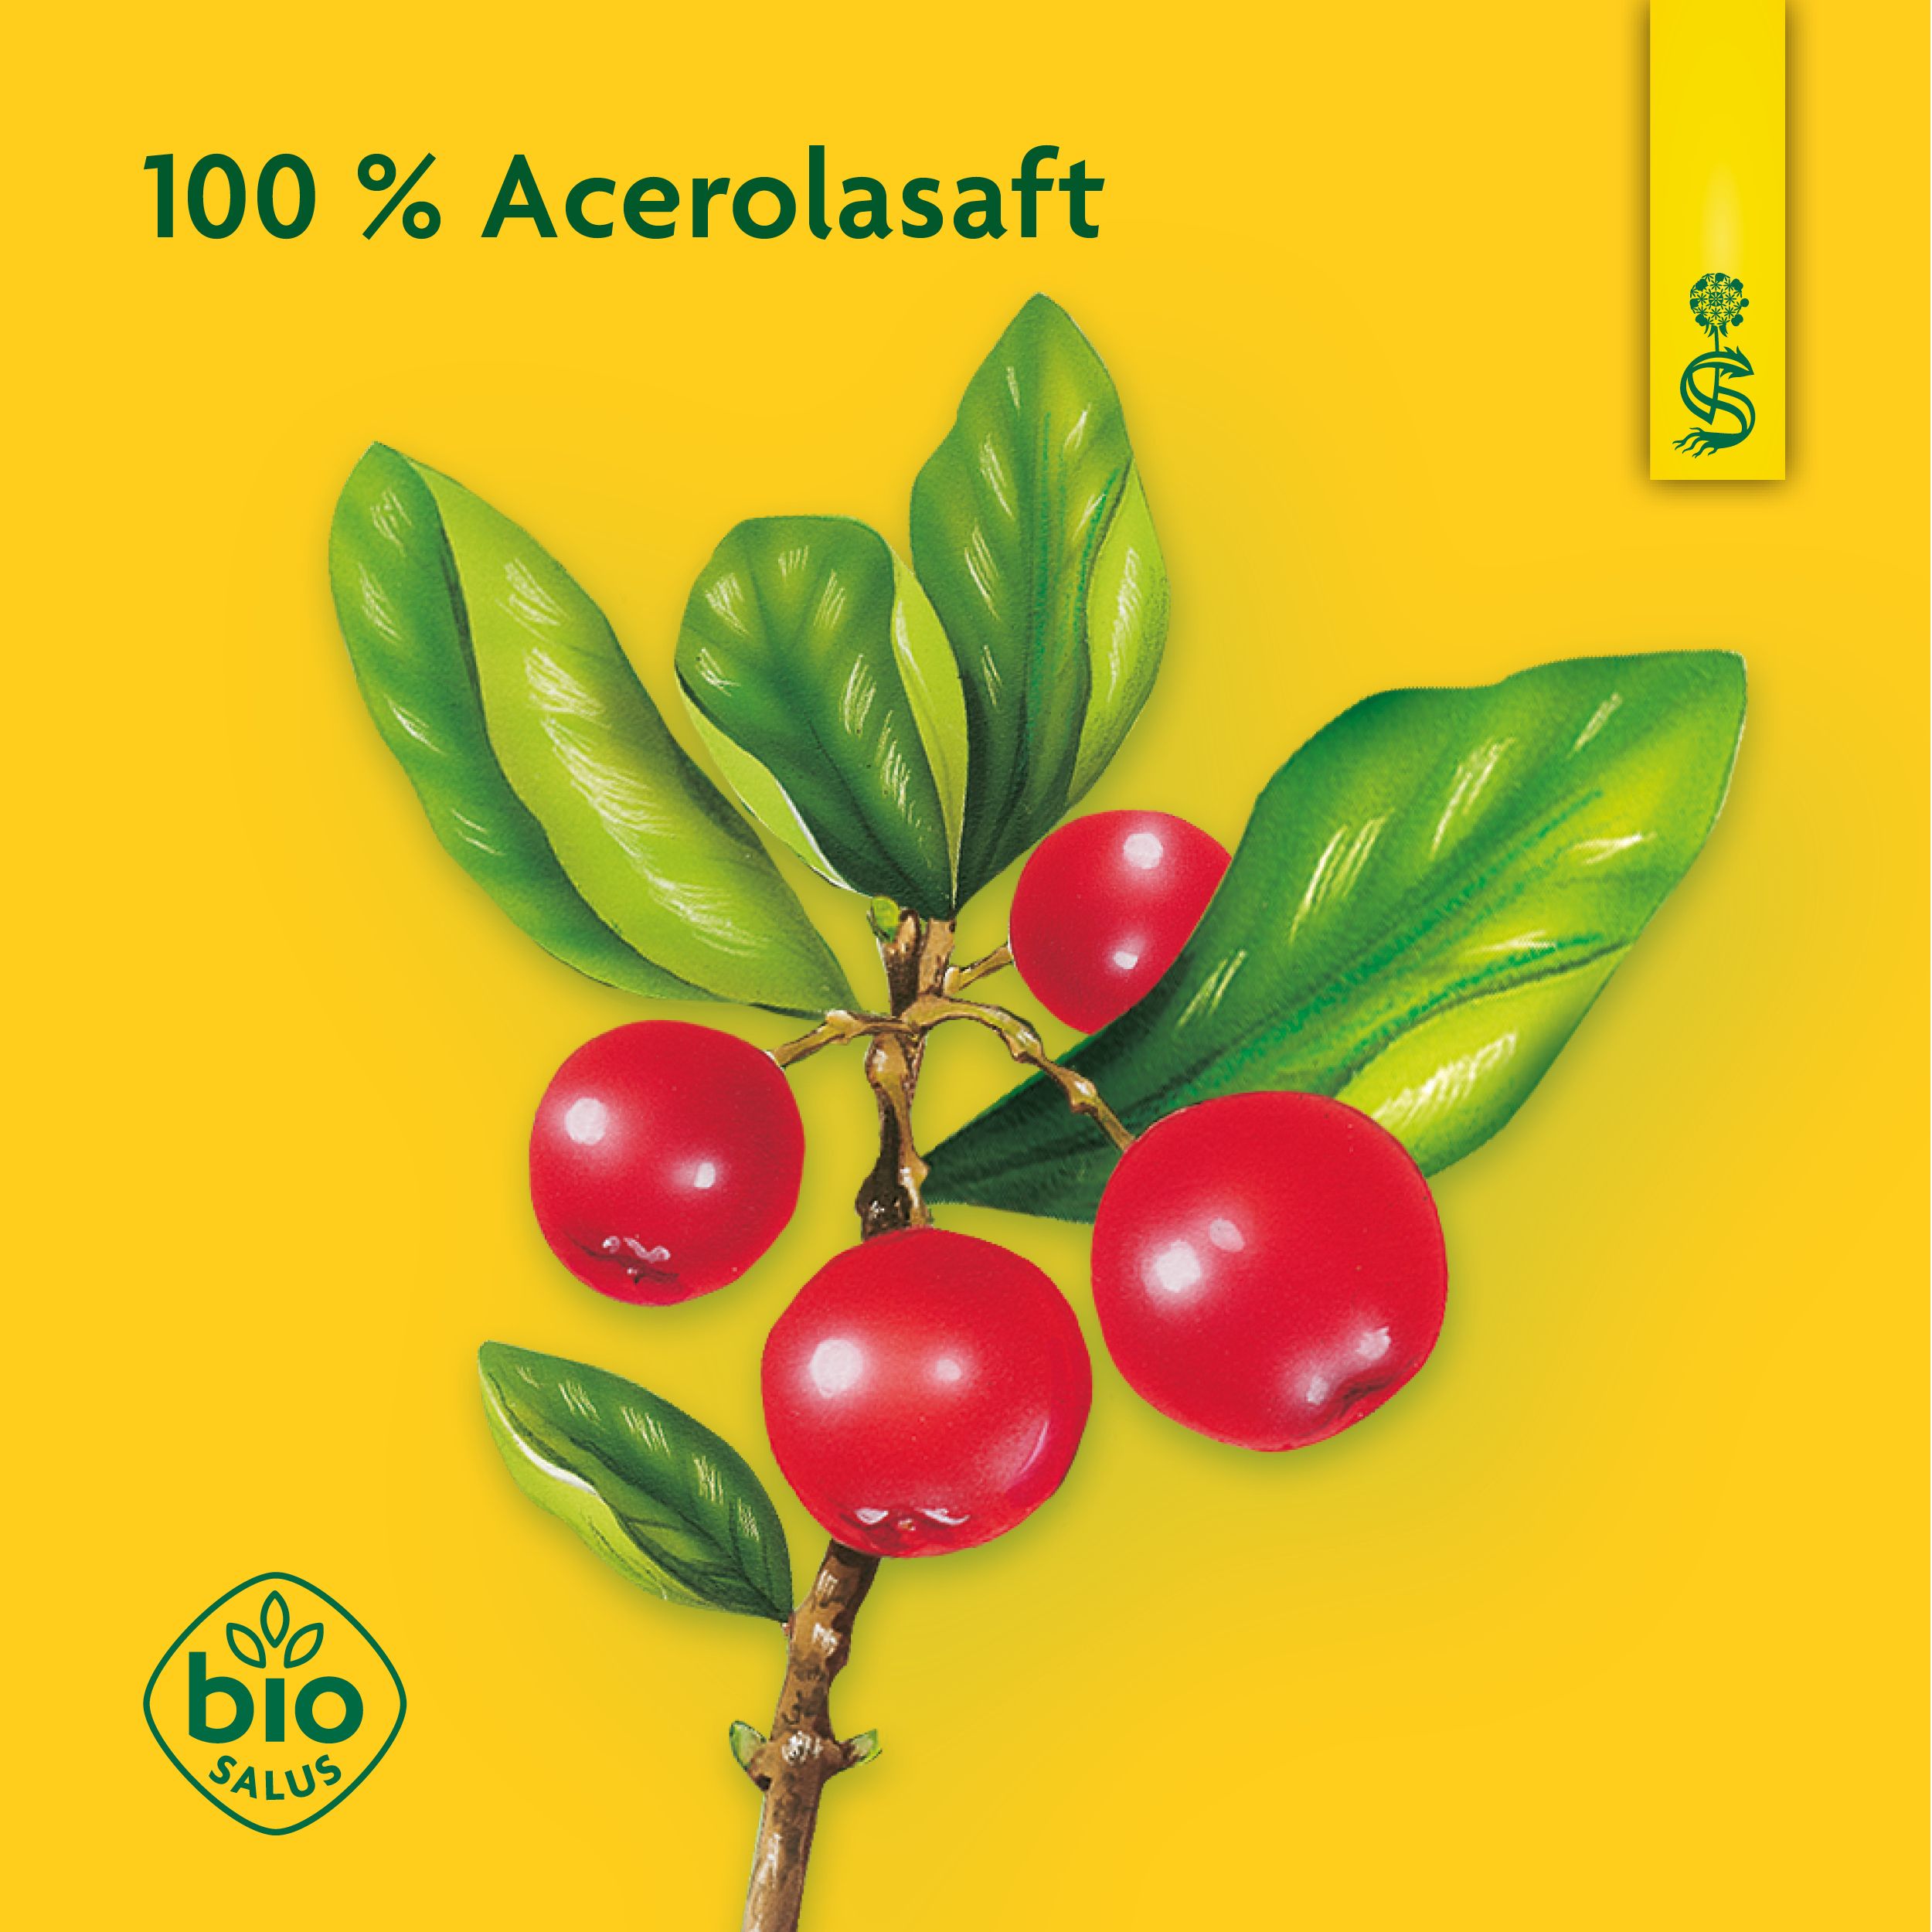 Schoenenberger® naturtrüber Fruchtsaft Acerola